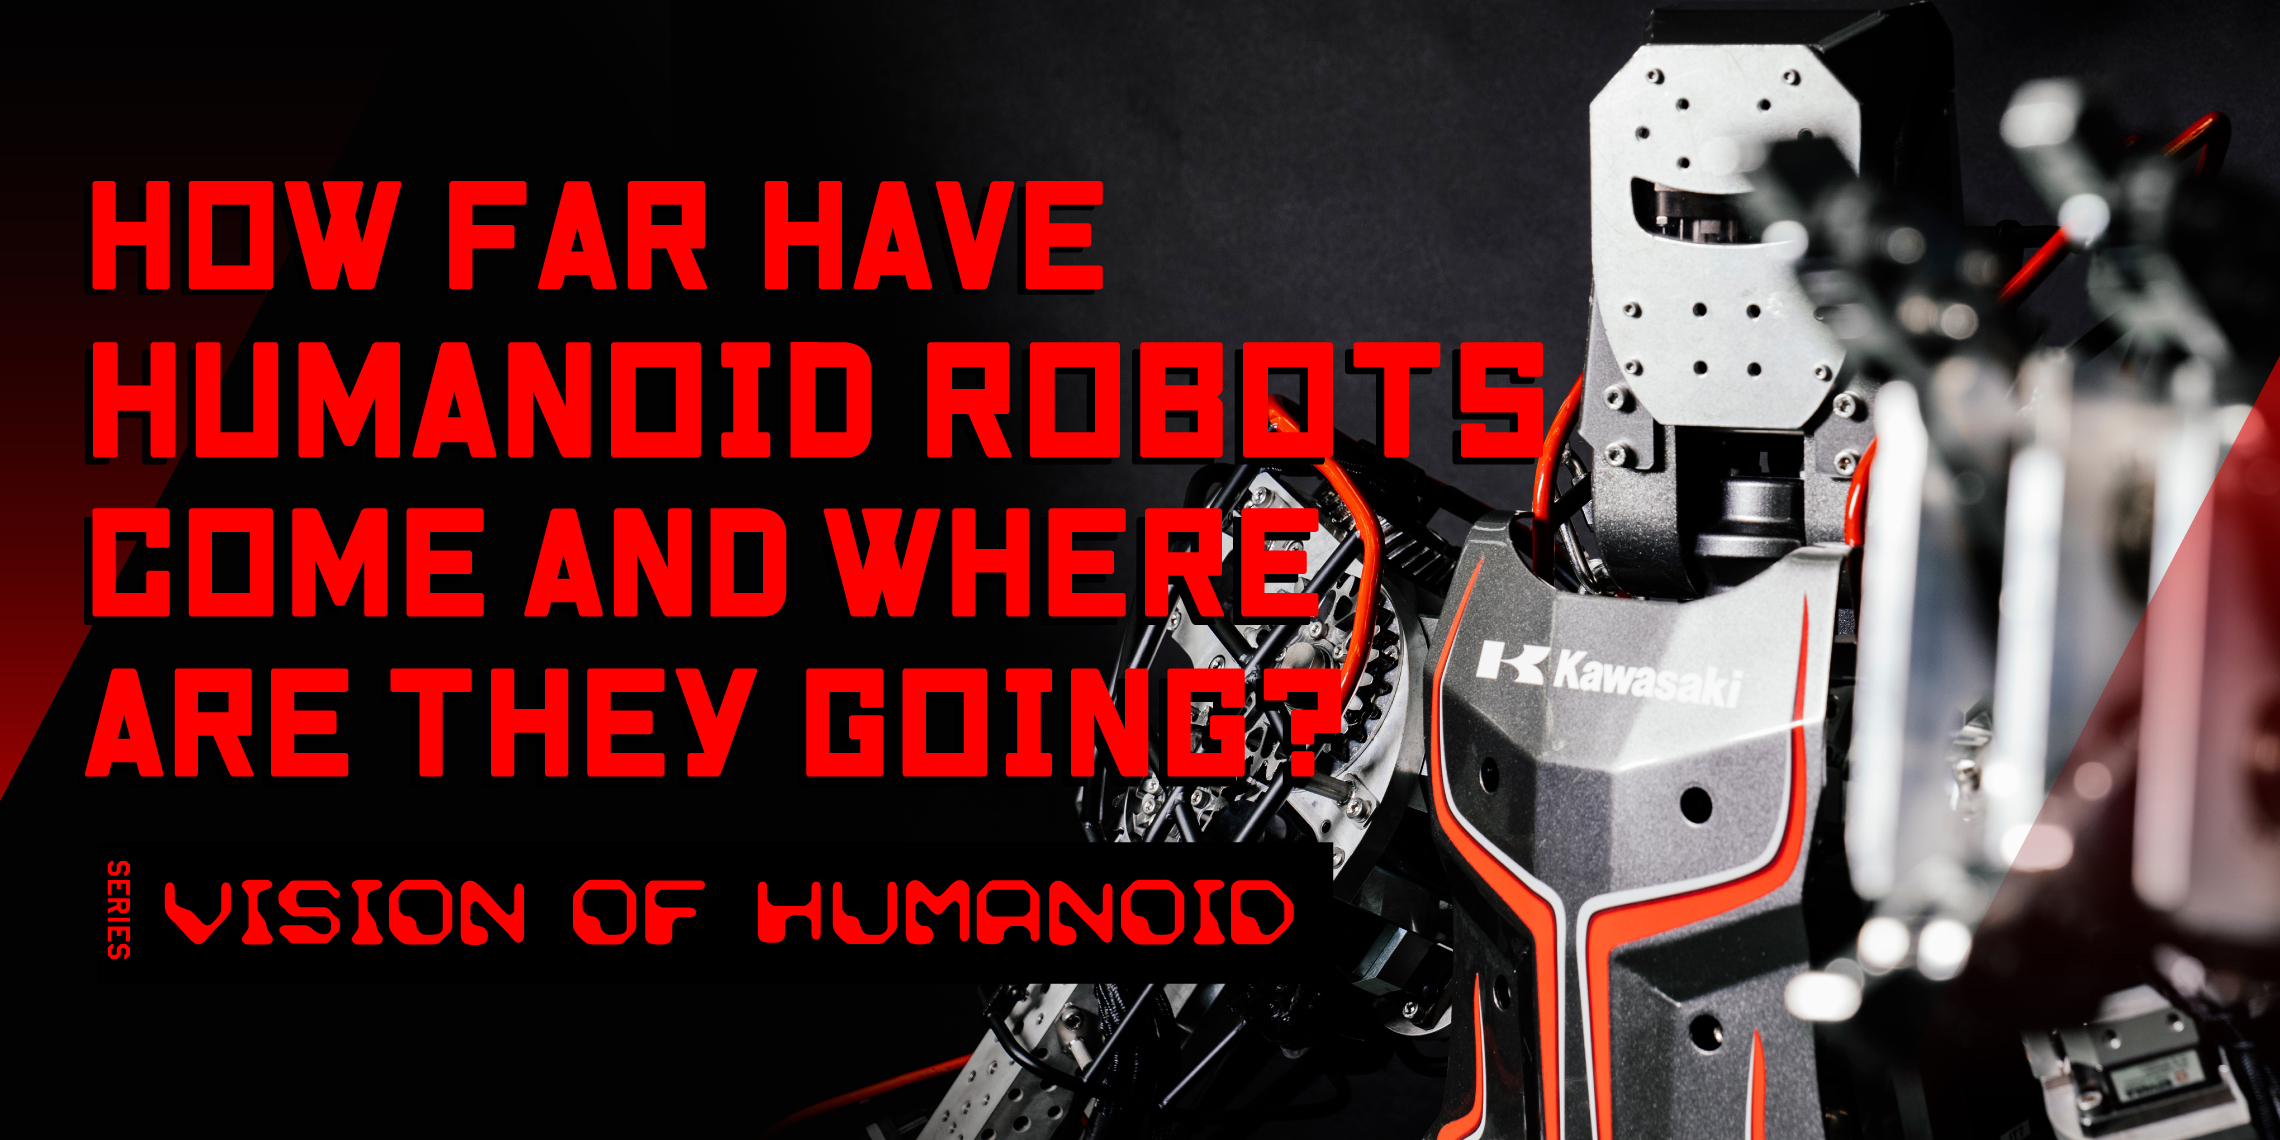 Future of humanoid robots
